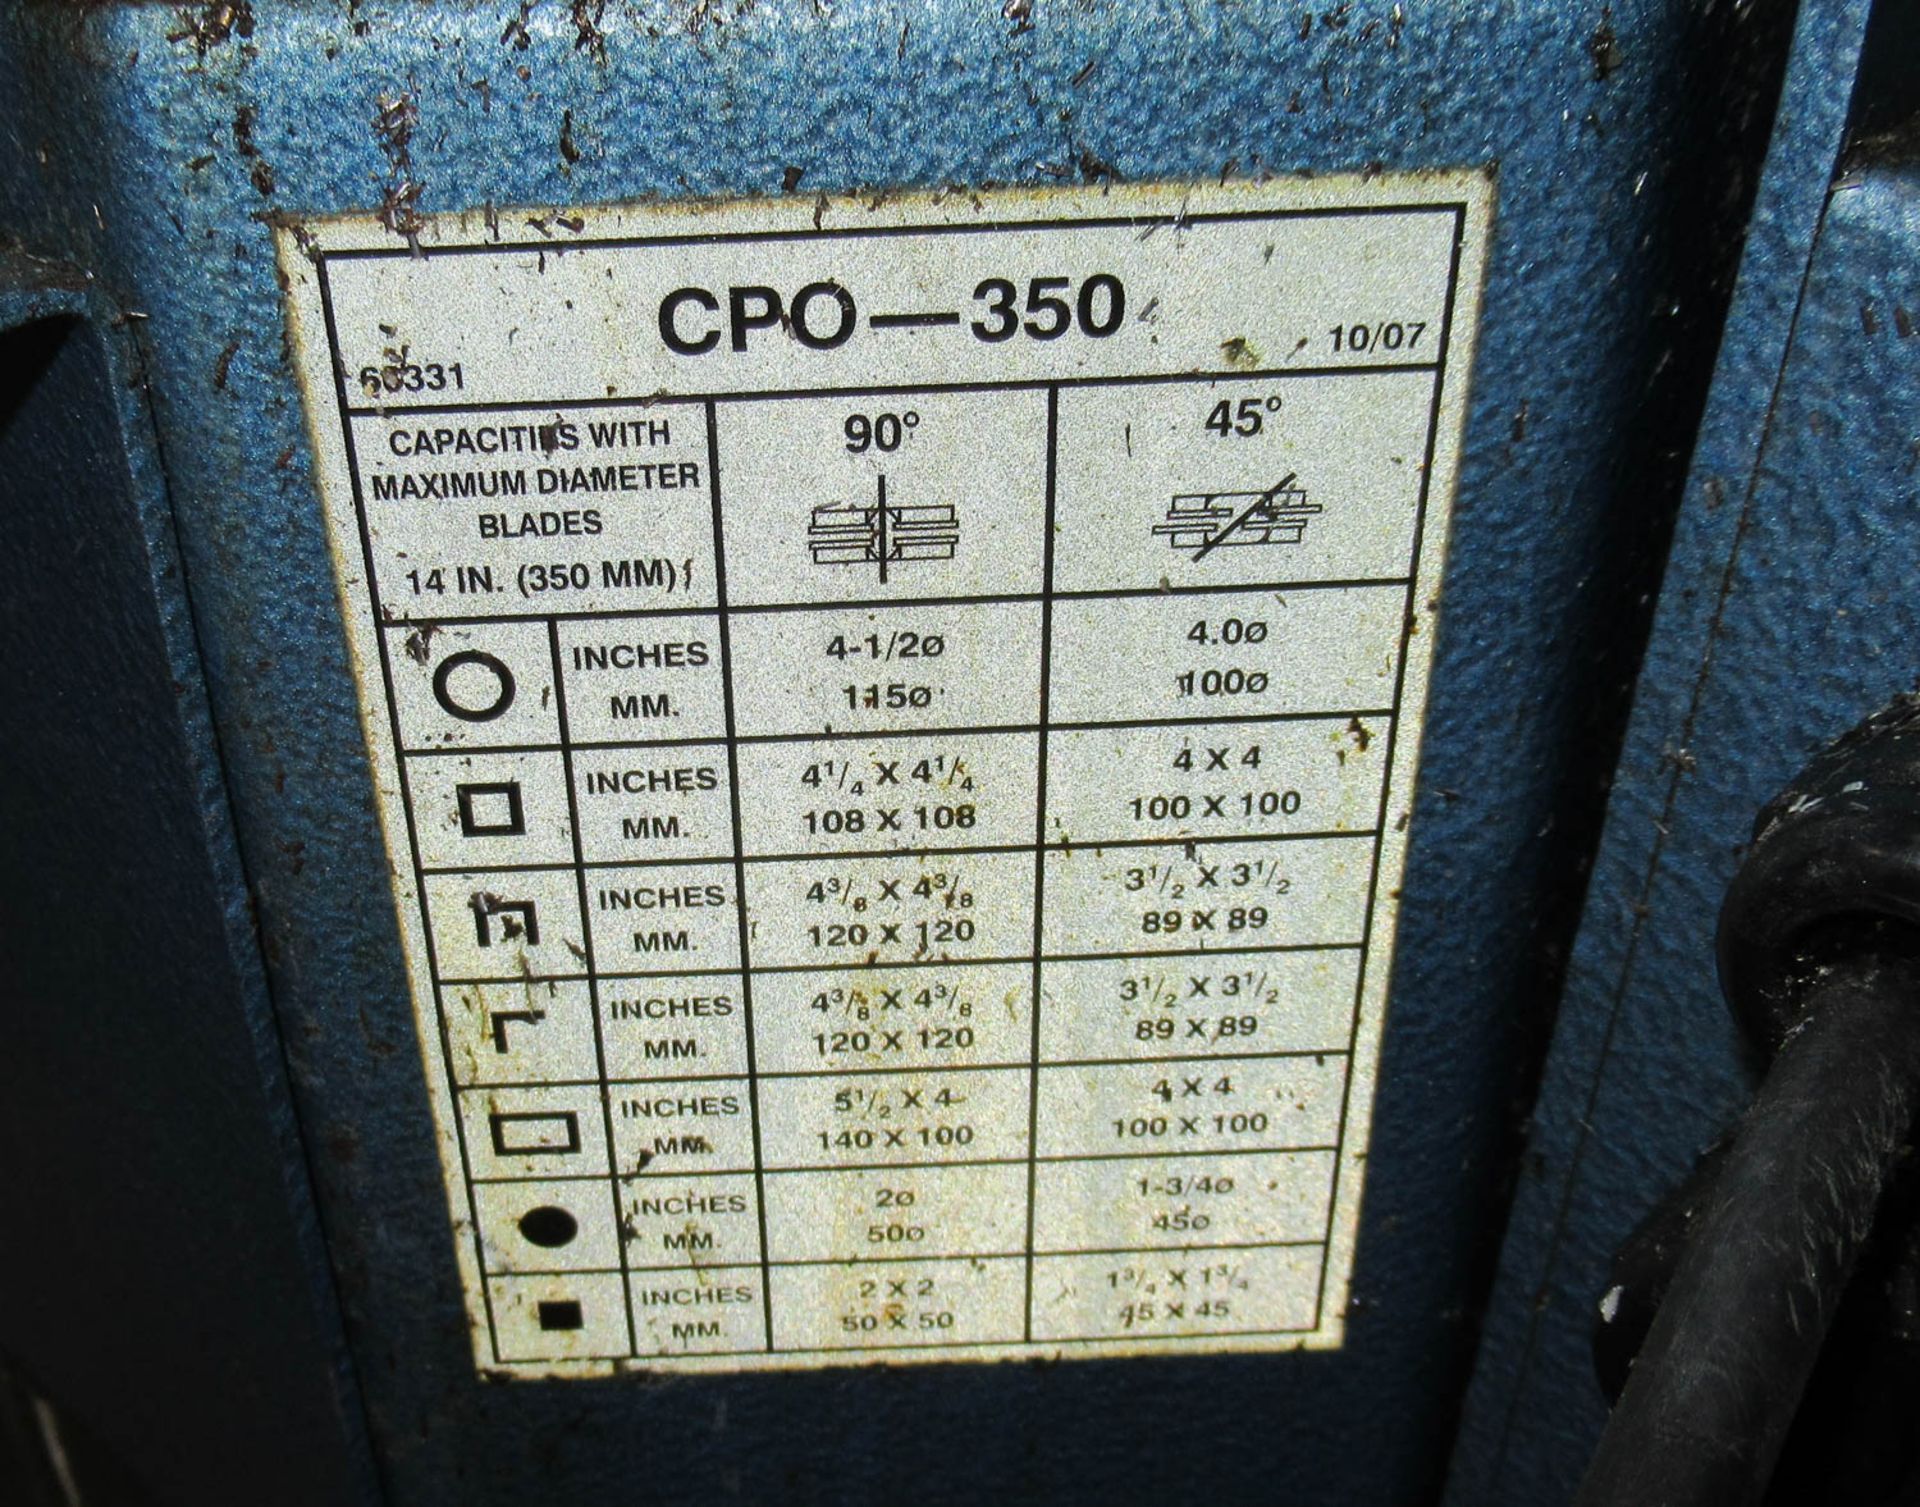 SCOTCHMAN MDL. CPO-350 "VS-350/PK/PD" MITRE COLD SAW, 4-1/2" CAPACITY, 5HP, 12" DIAMETER BLADE, - Image 4 of 6